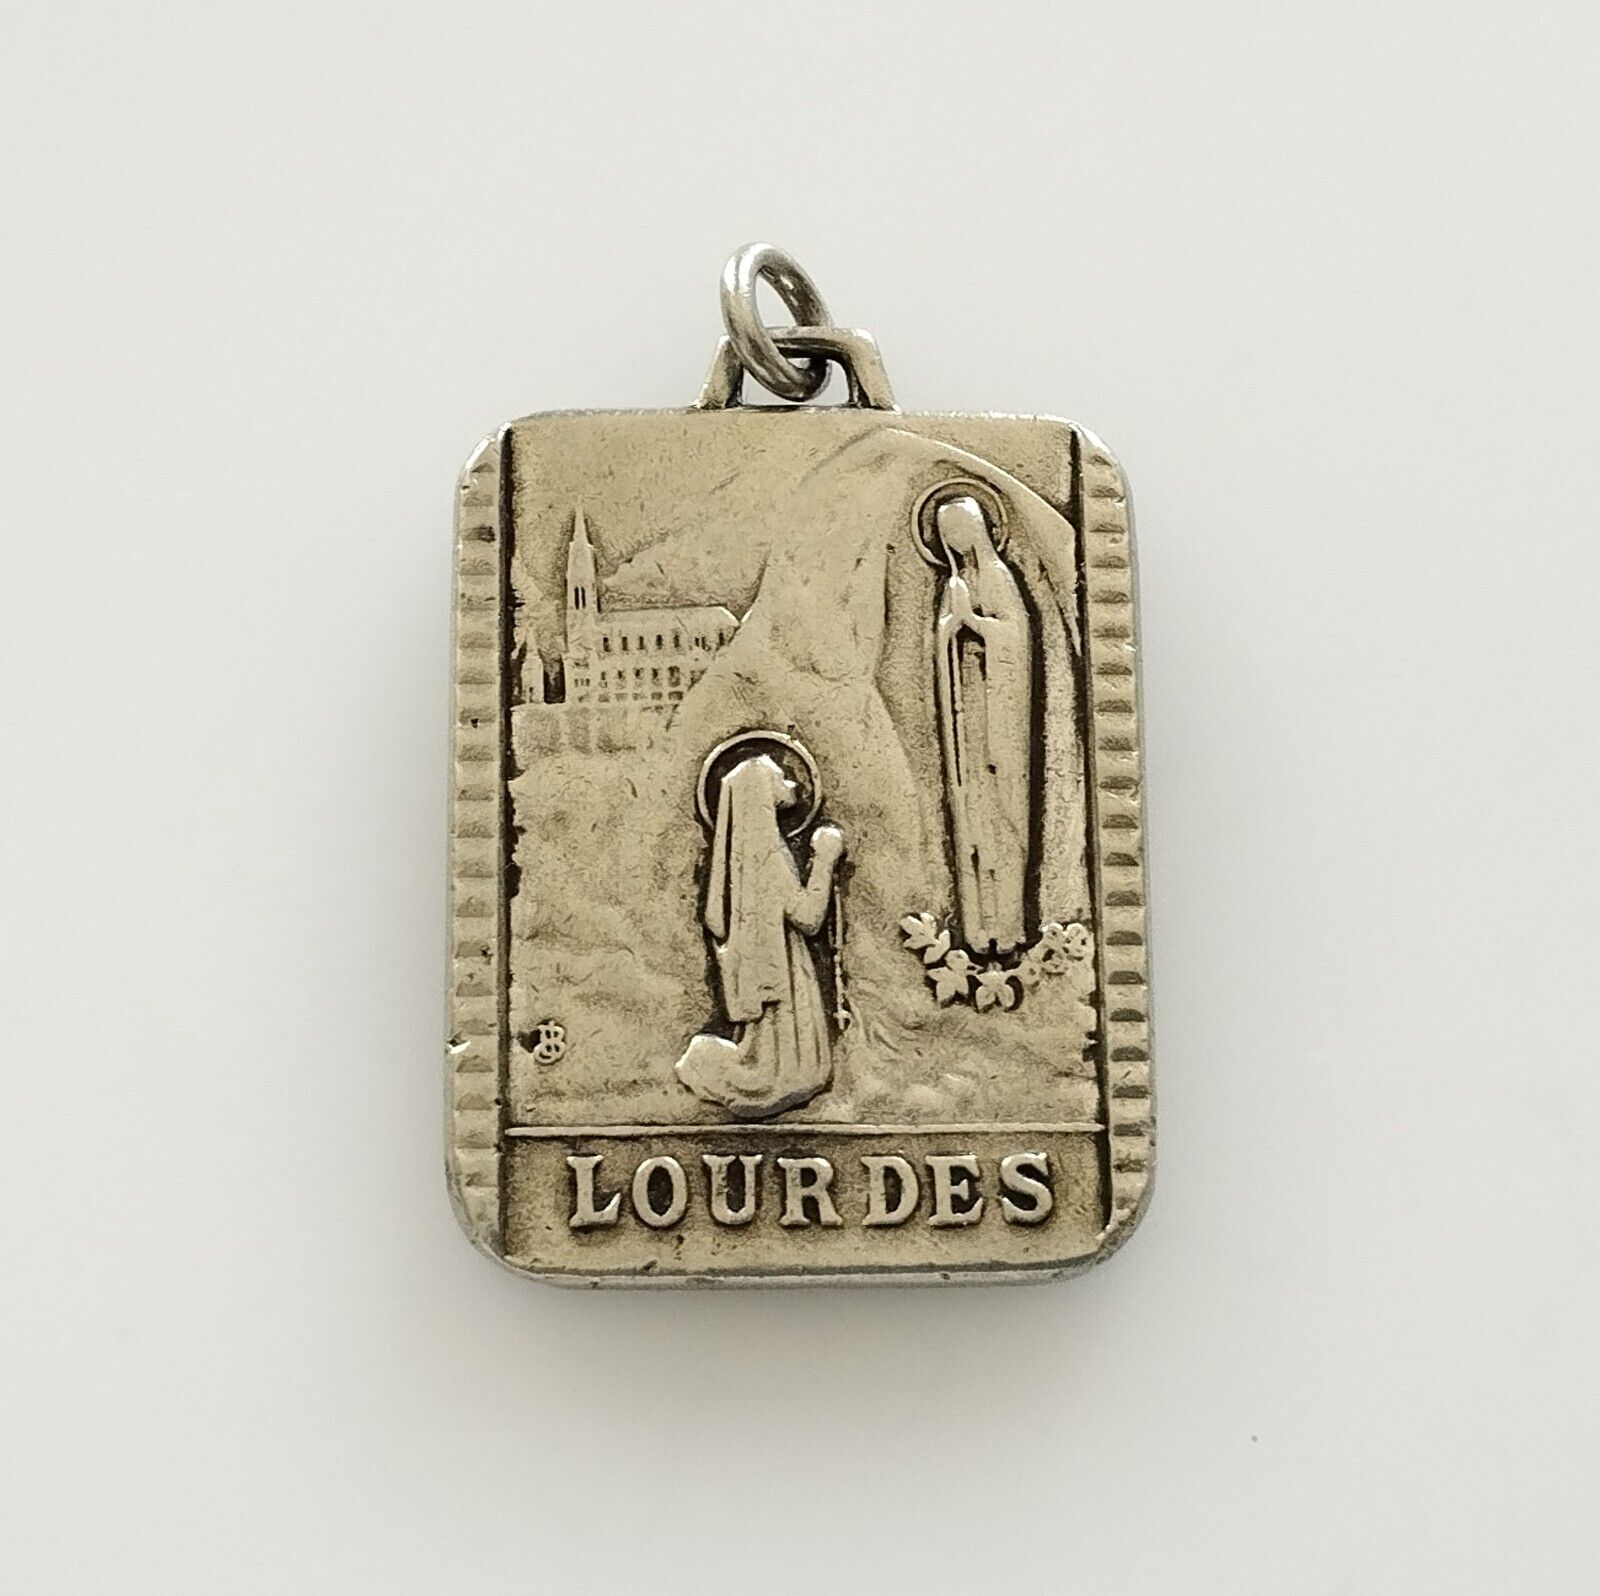 Mama-Estelle Antique Gross Medal Virgin Cave Lourdes Metal